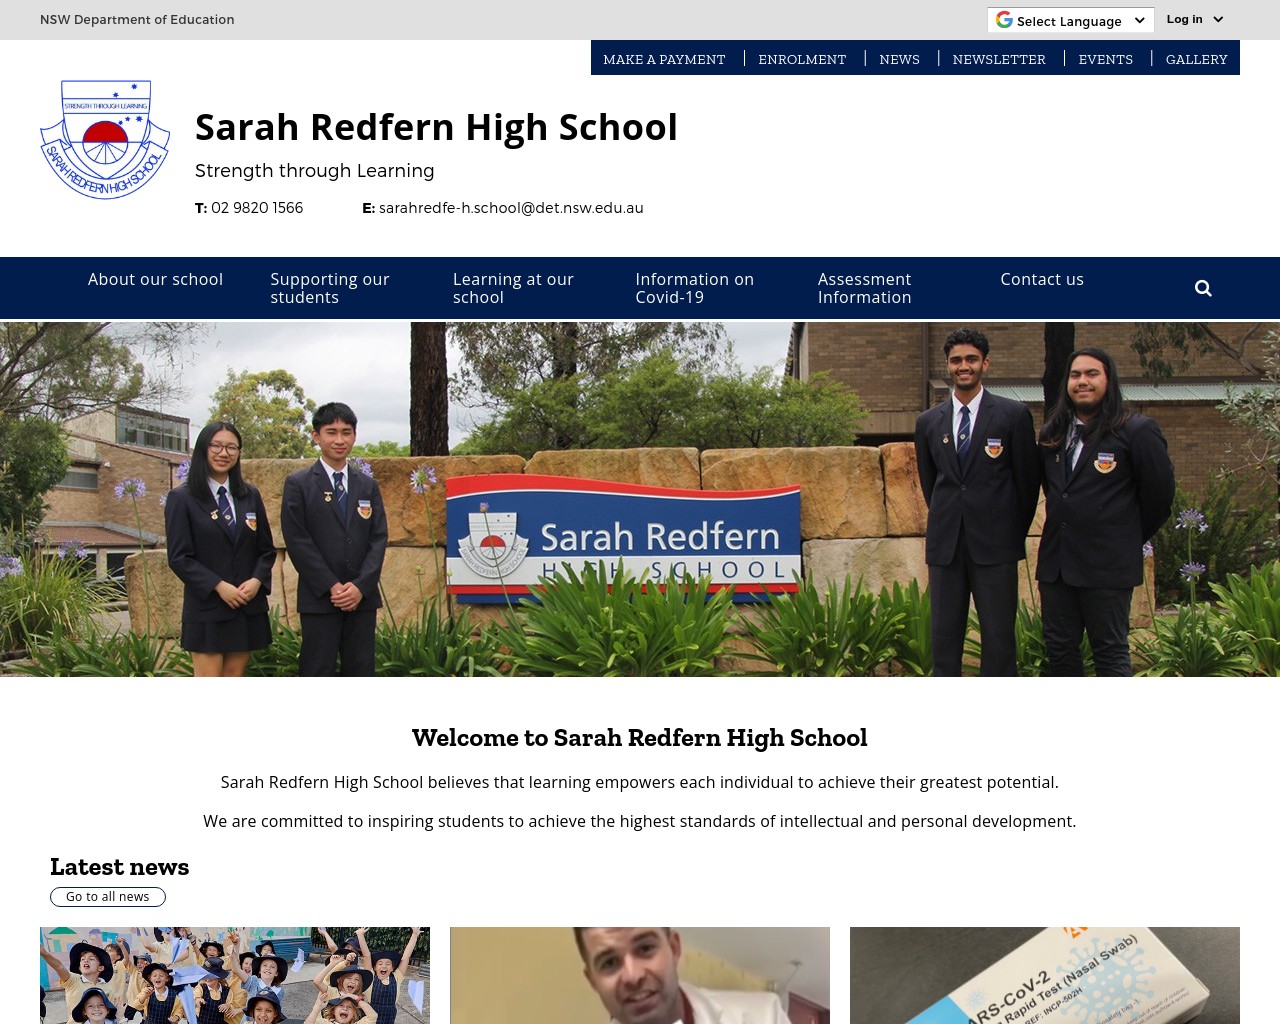 Sarah Redfern High School